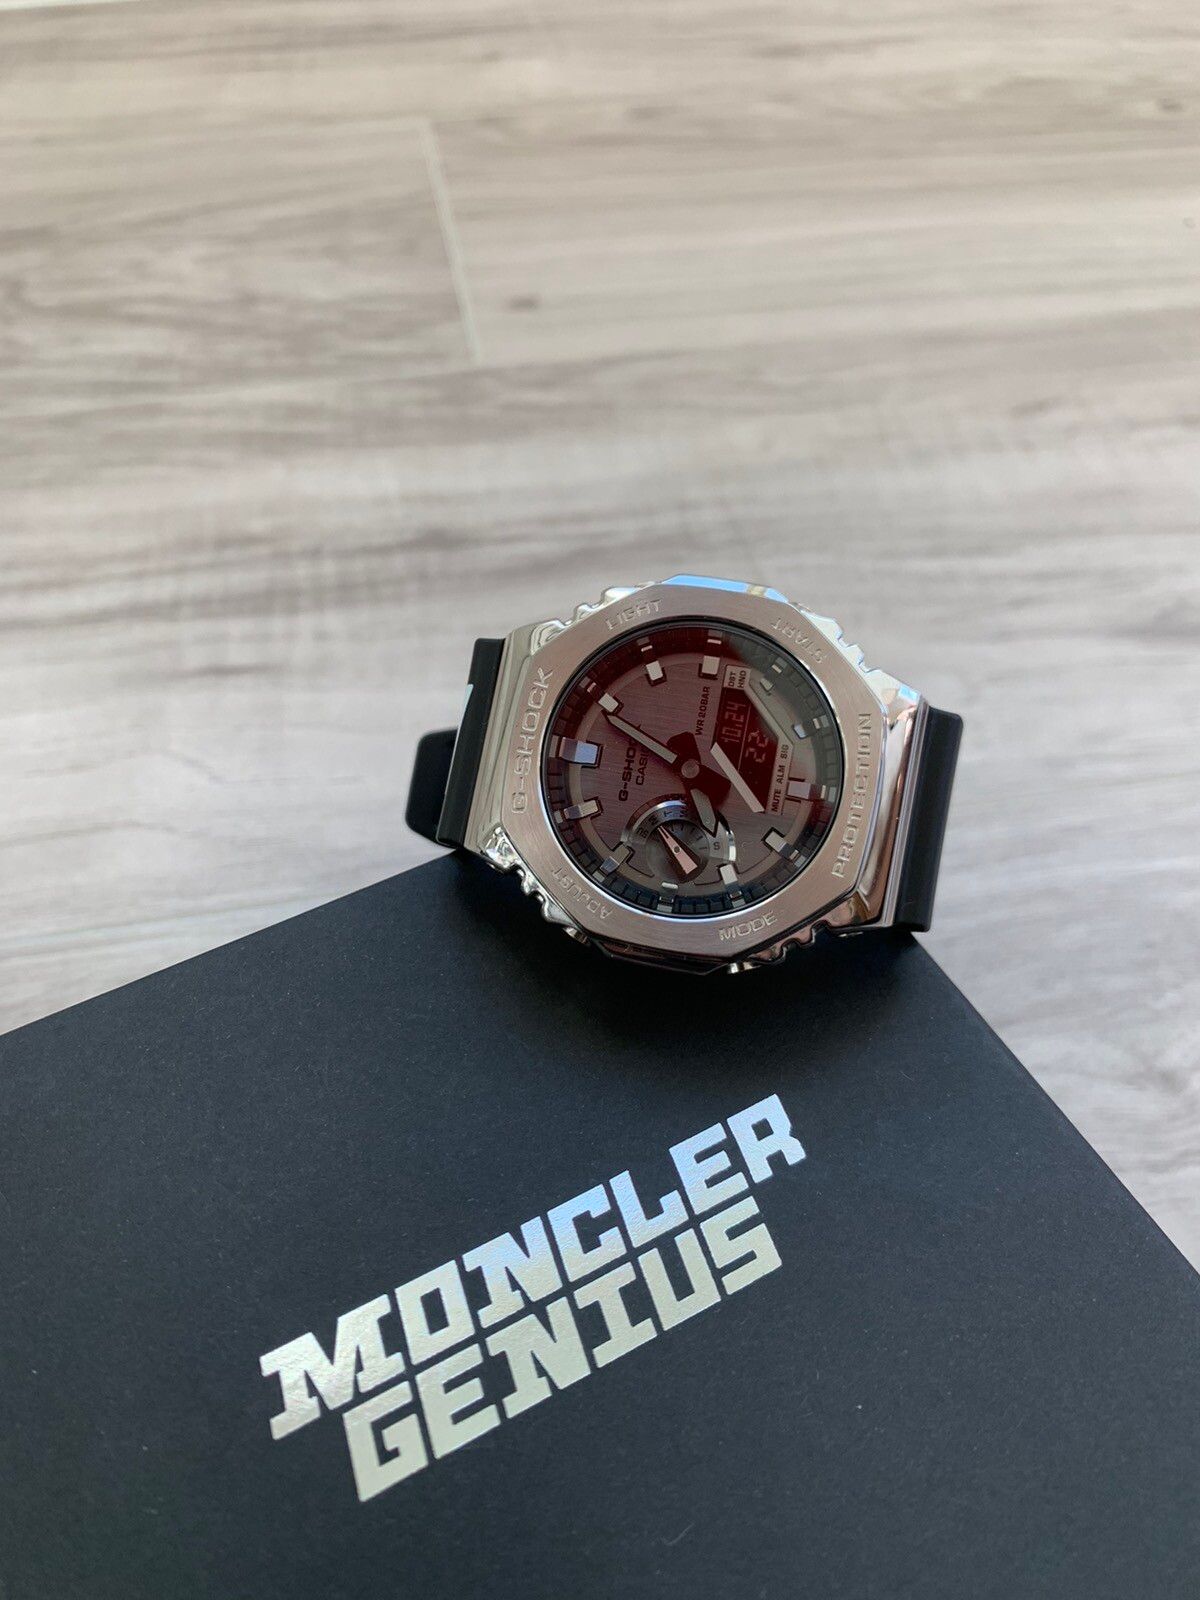 Moncler G-Shock “Casioak” GM2100-1AER | Grailed